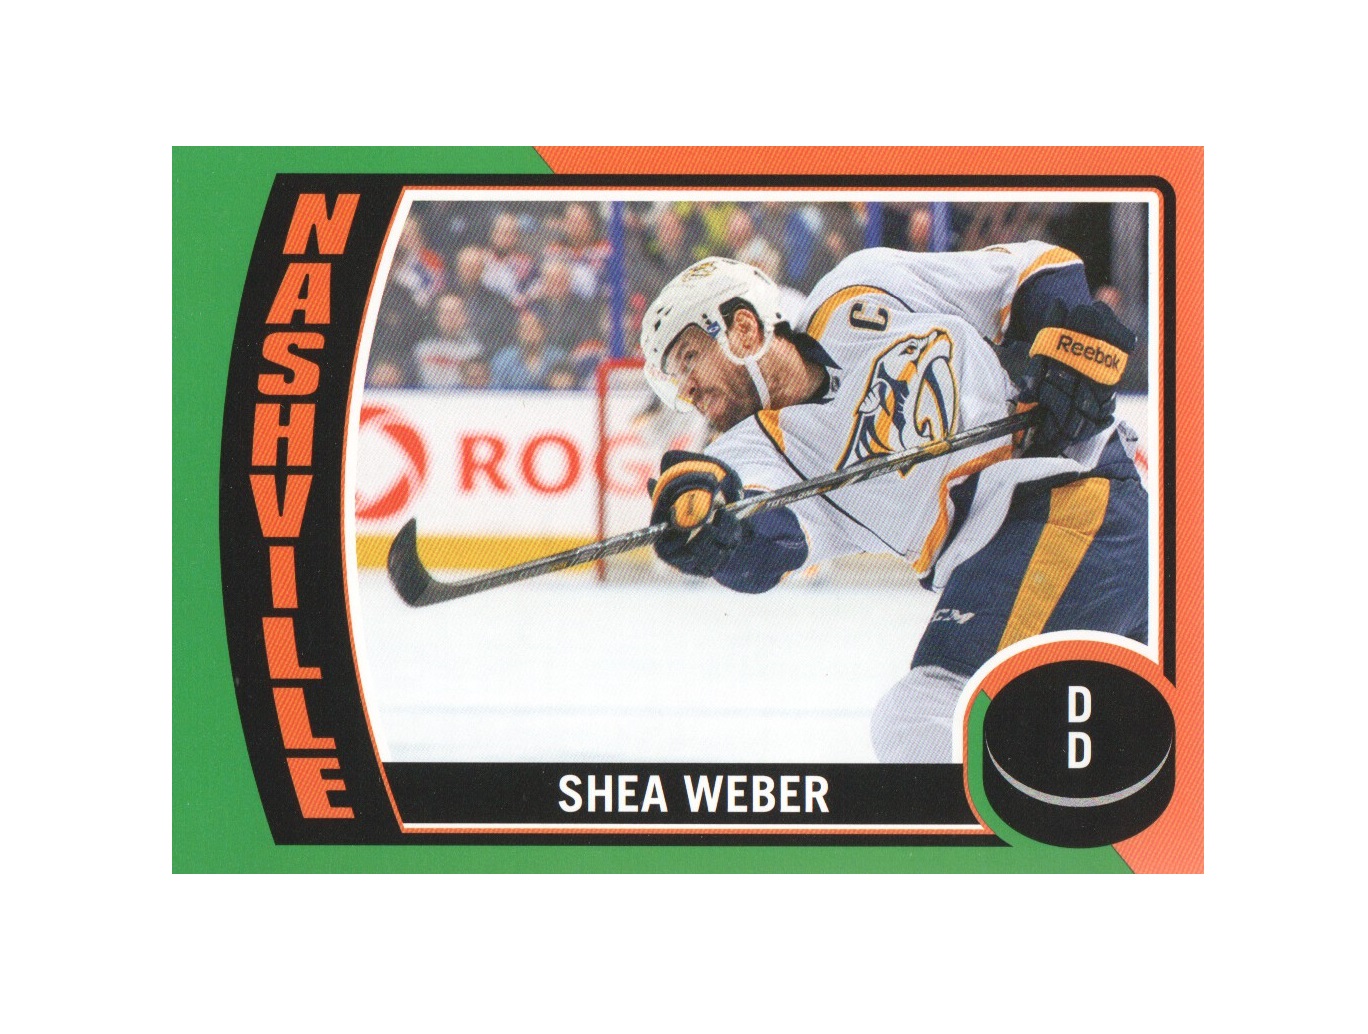 2014-15 O-Pee-Chee Stickers #ST21 Shea Weber (10-X189-PREDATORS)